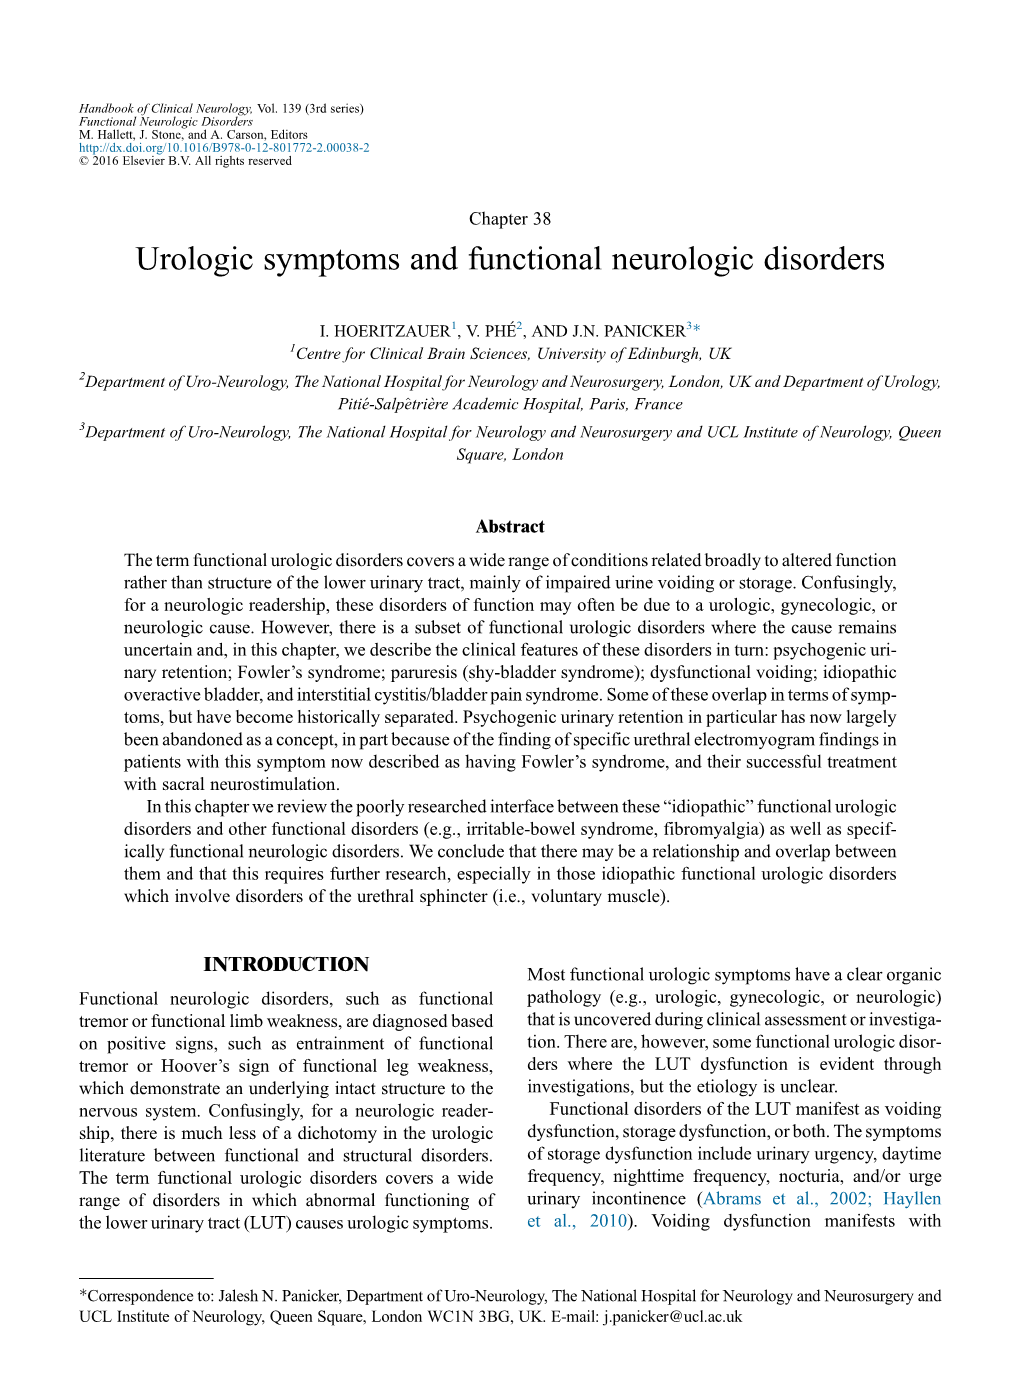 Urologic Symptoms and Functional Neurologic Disorders